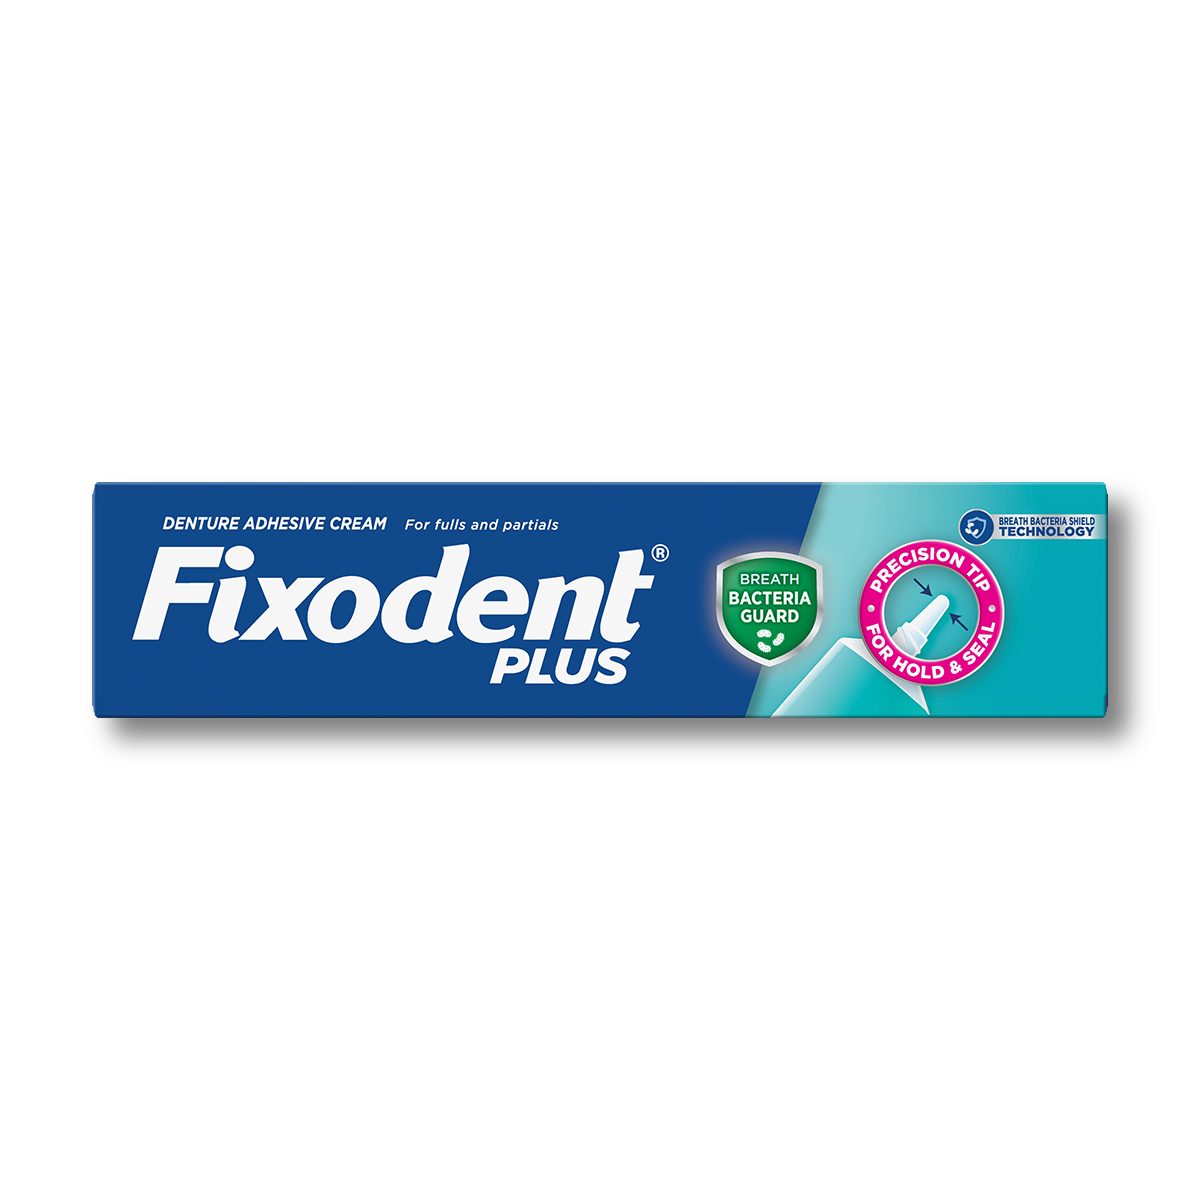 Fixodent Plus Bacteria Guard - Variant 1 Img